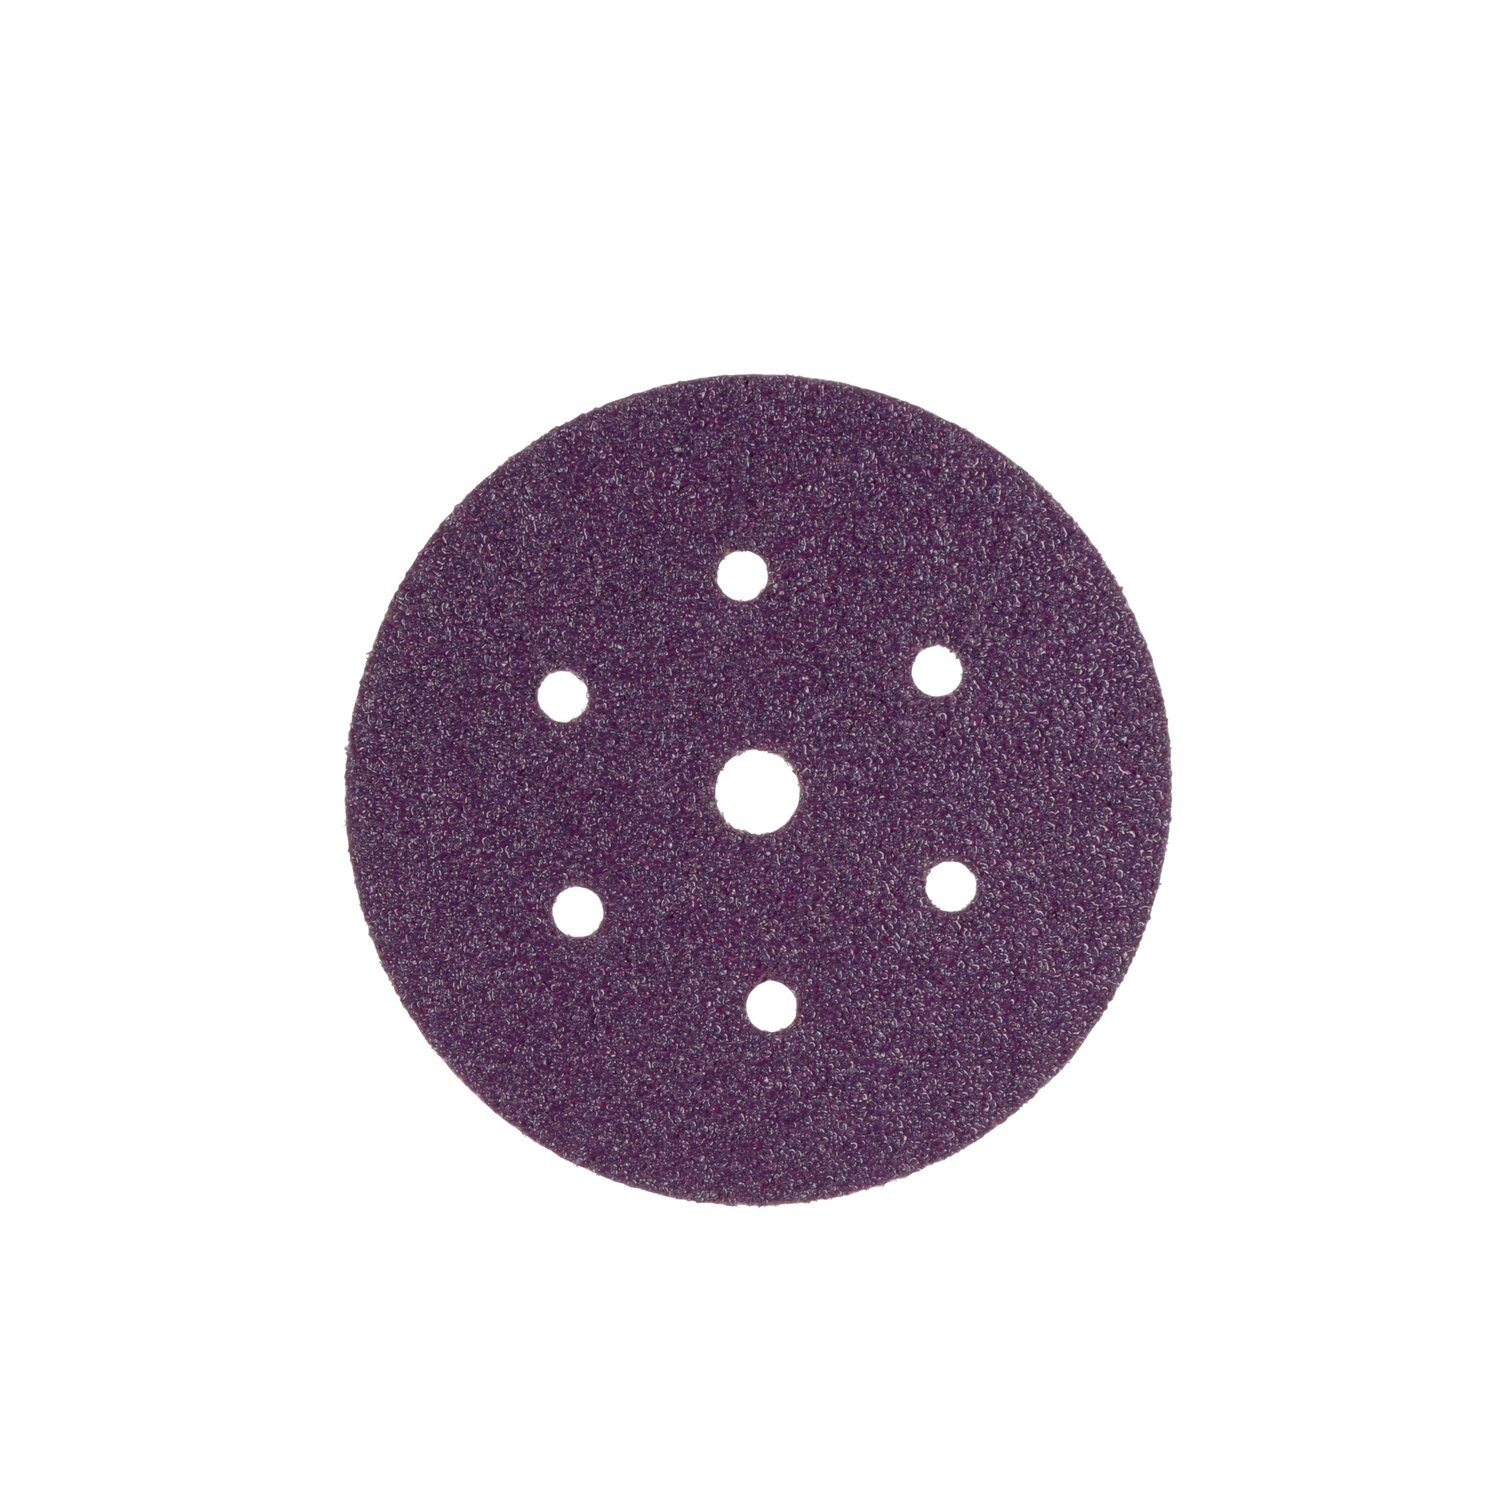 7010362788 - 3M Purple Abrasive Disc D/F, 30787, 6 in, 36E, 25 discs per carton, 4
cartons per case